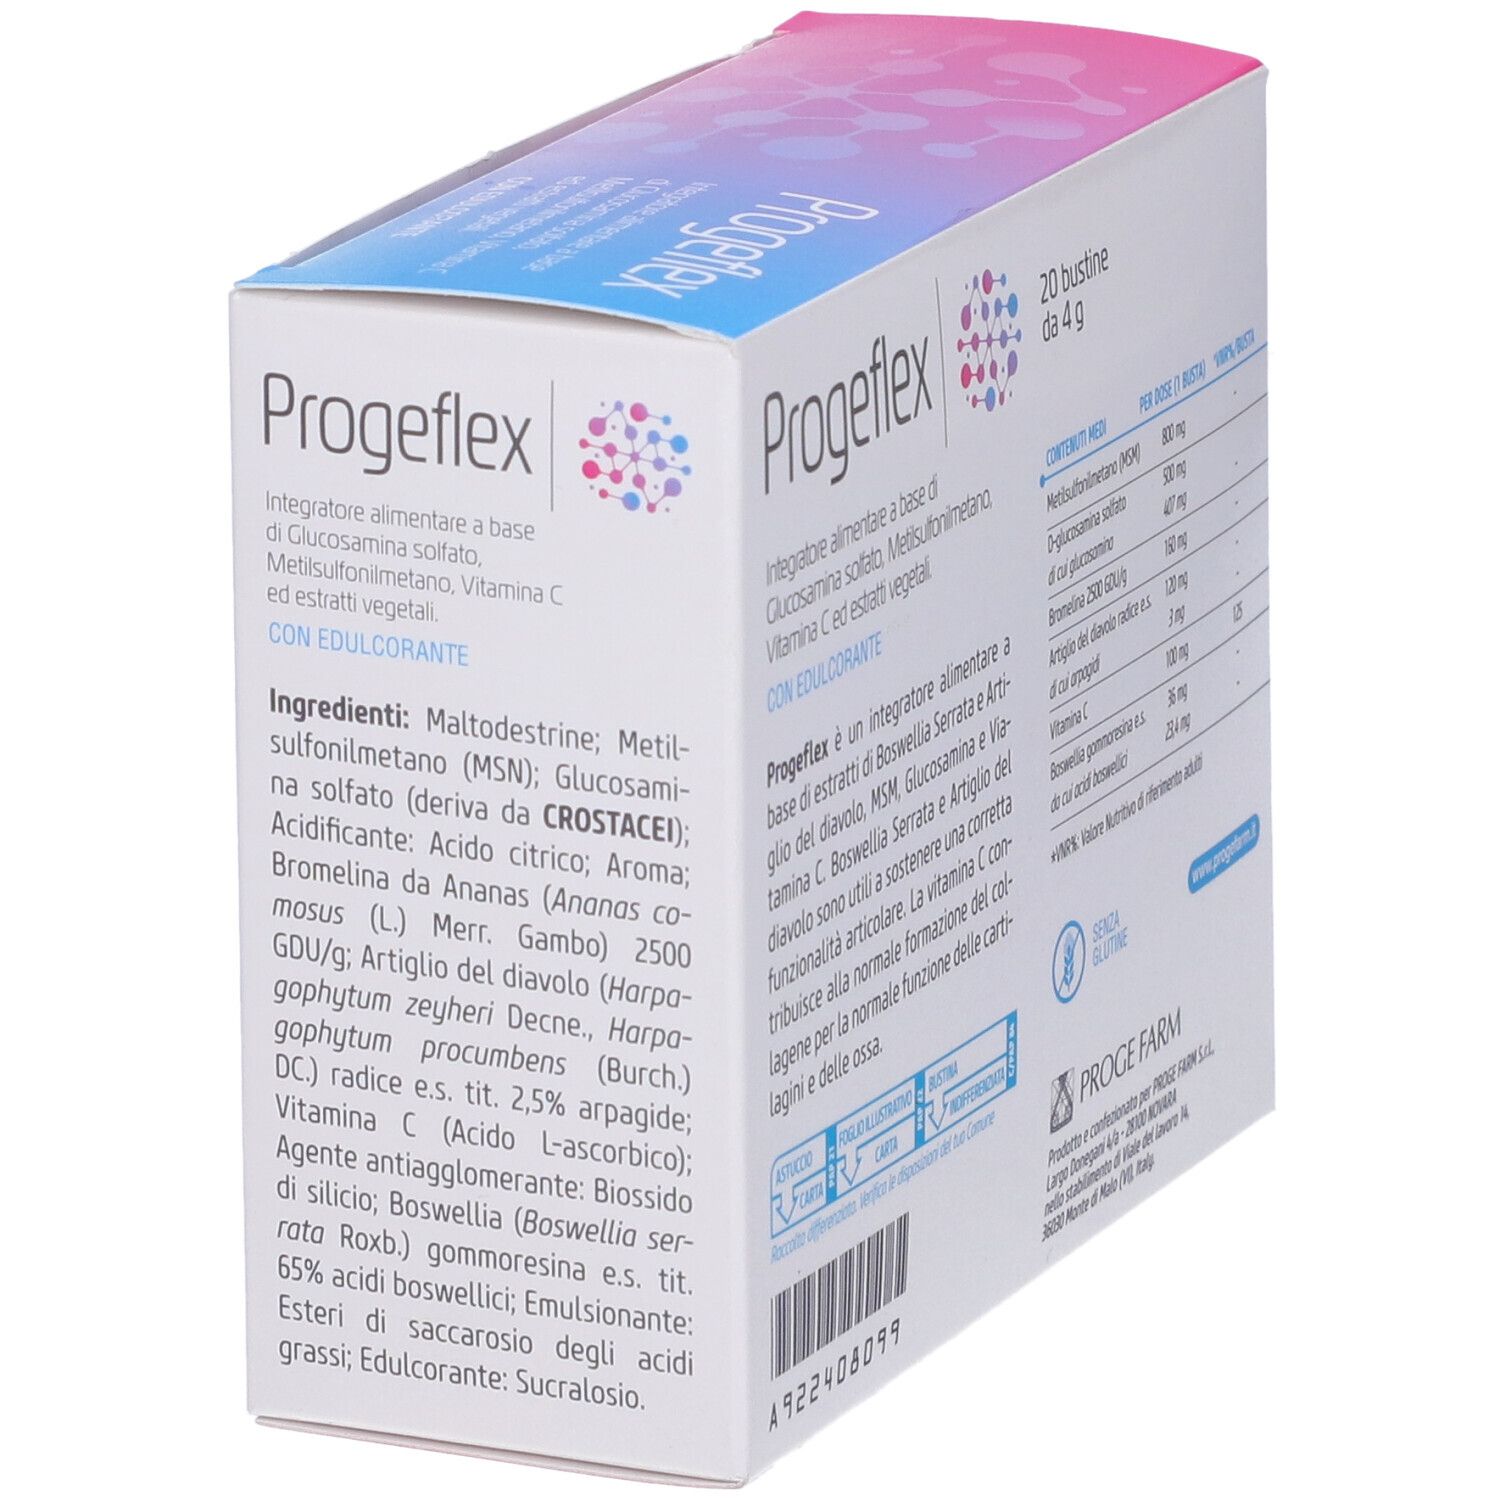 Progeflex 20Bust